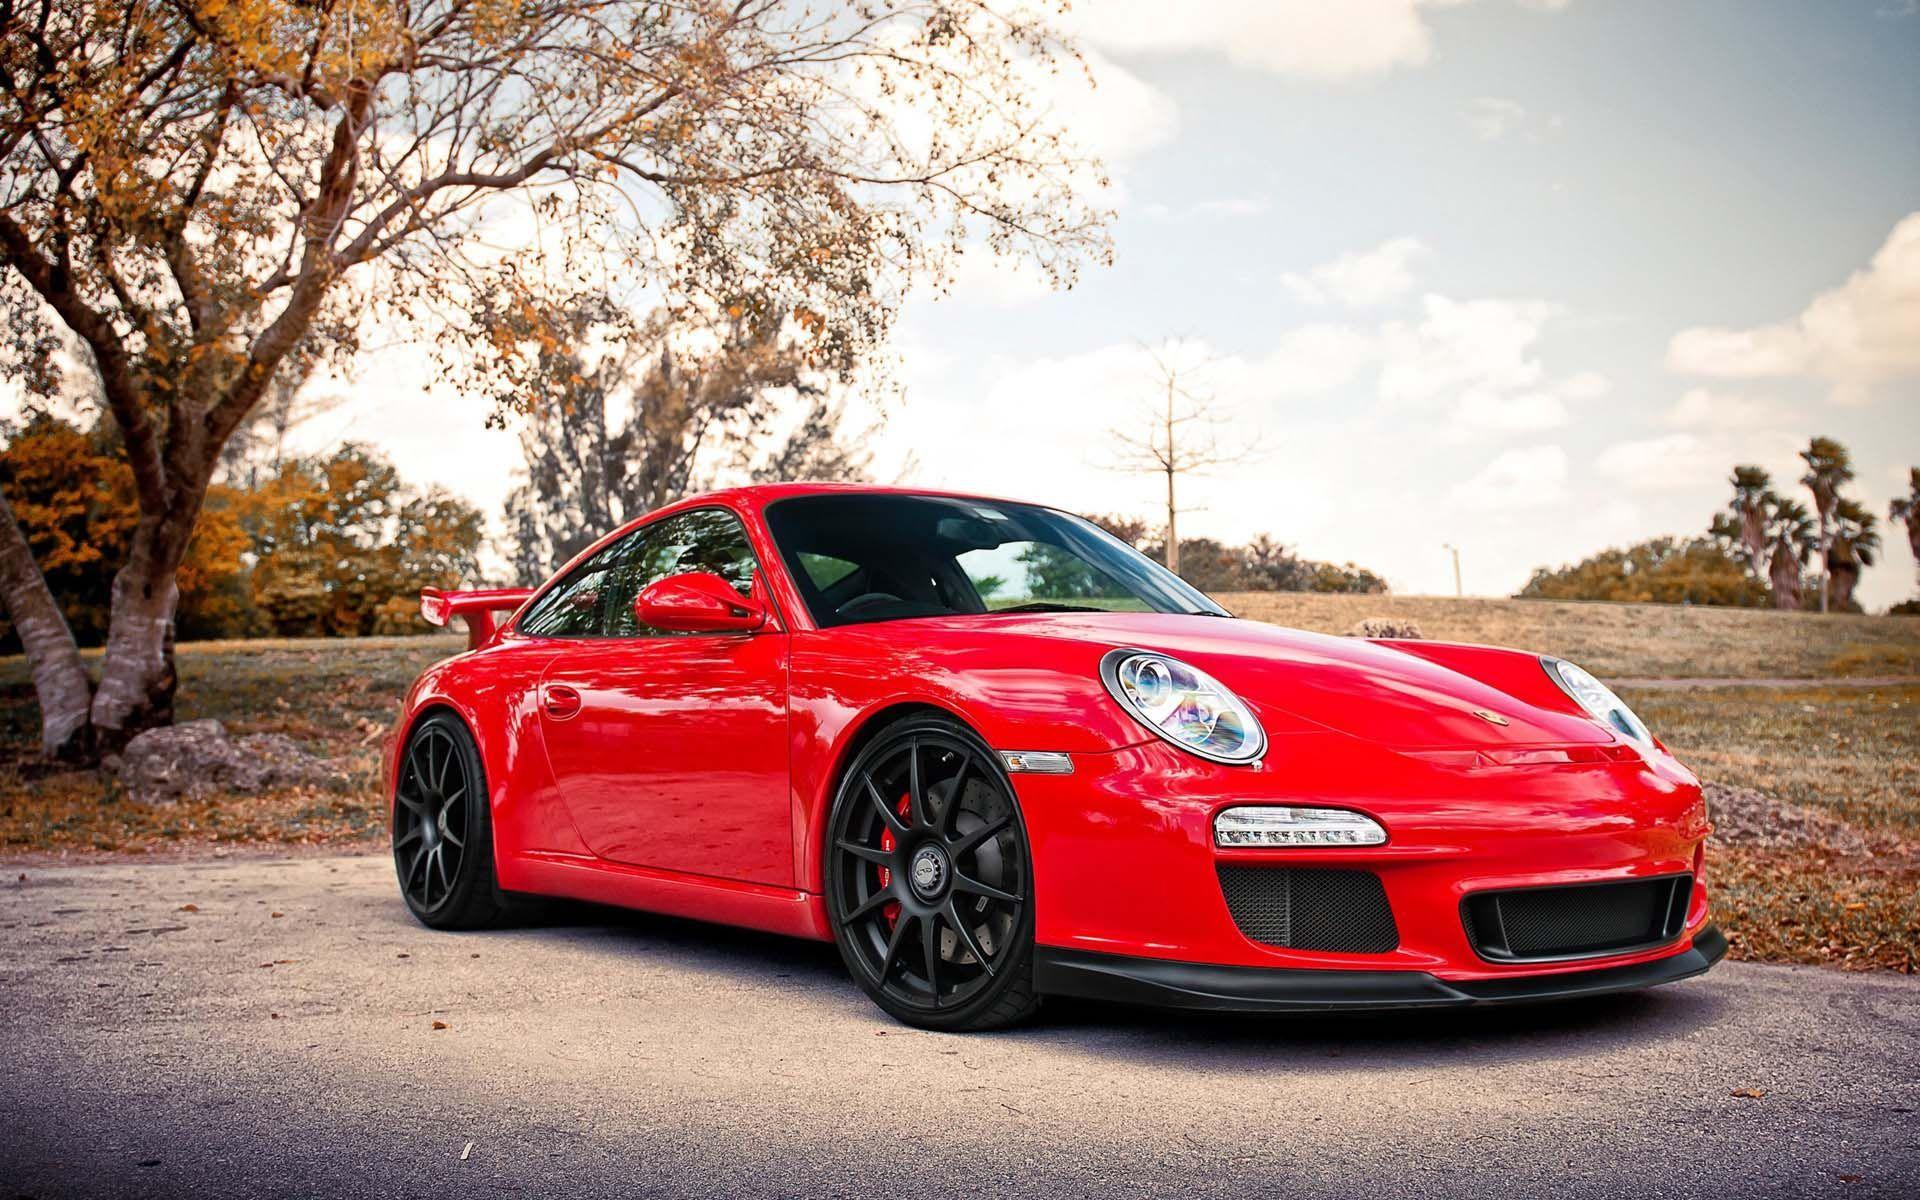 Red Porsche Wallpapers - Top Free Red Porsche Backgrounds ...